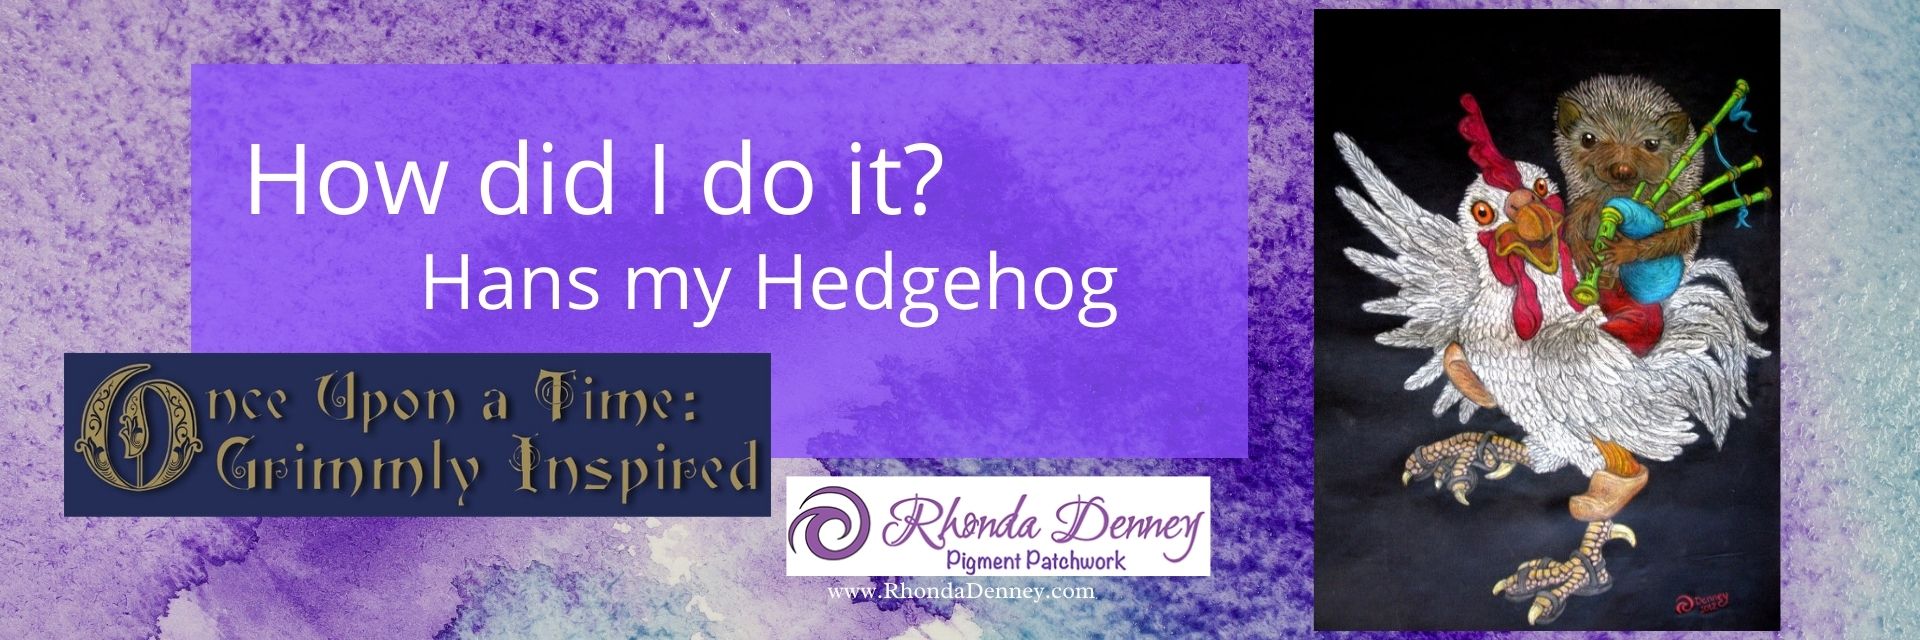 Rhonda Denney - How Did I Do It? Hans My Hedgehog